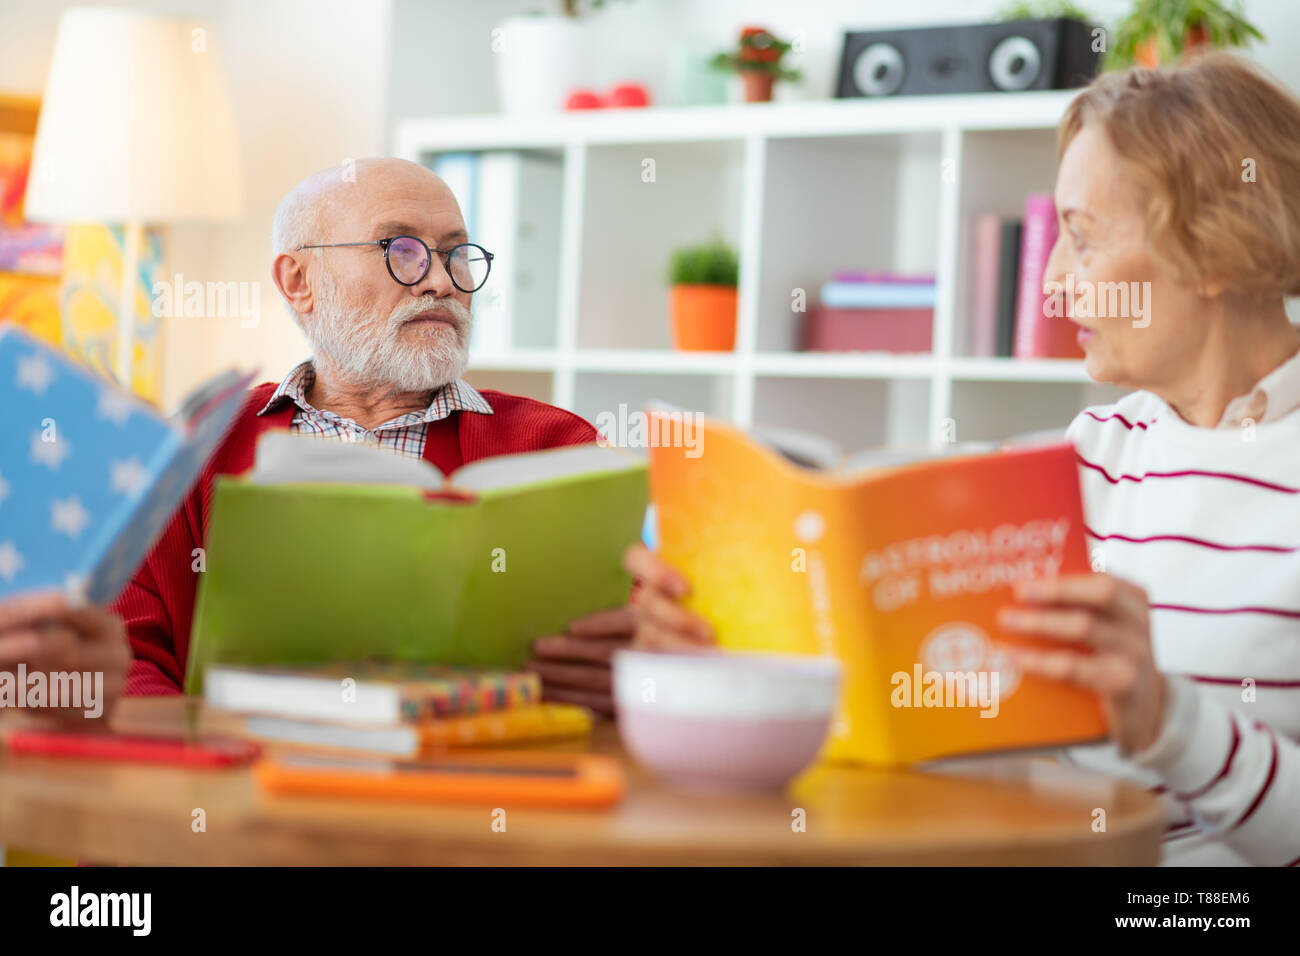 Pleasant senior people enjoying reading different books Stock Photo